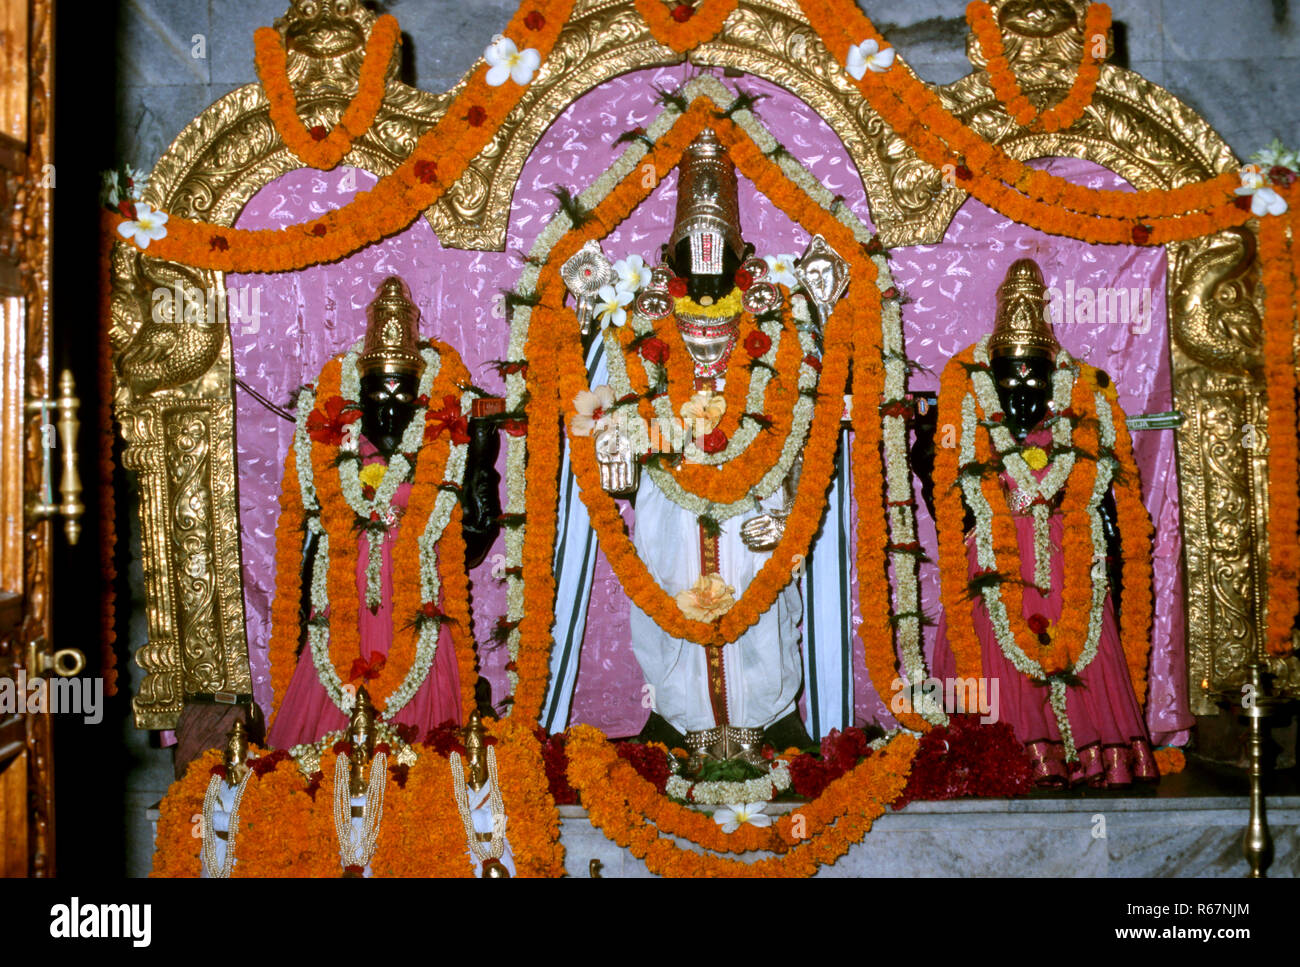 idol of god balaji with his wives, india Stock Photo - Alamy